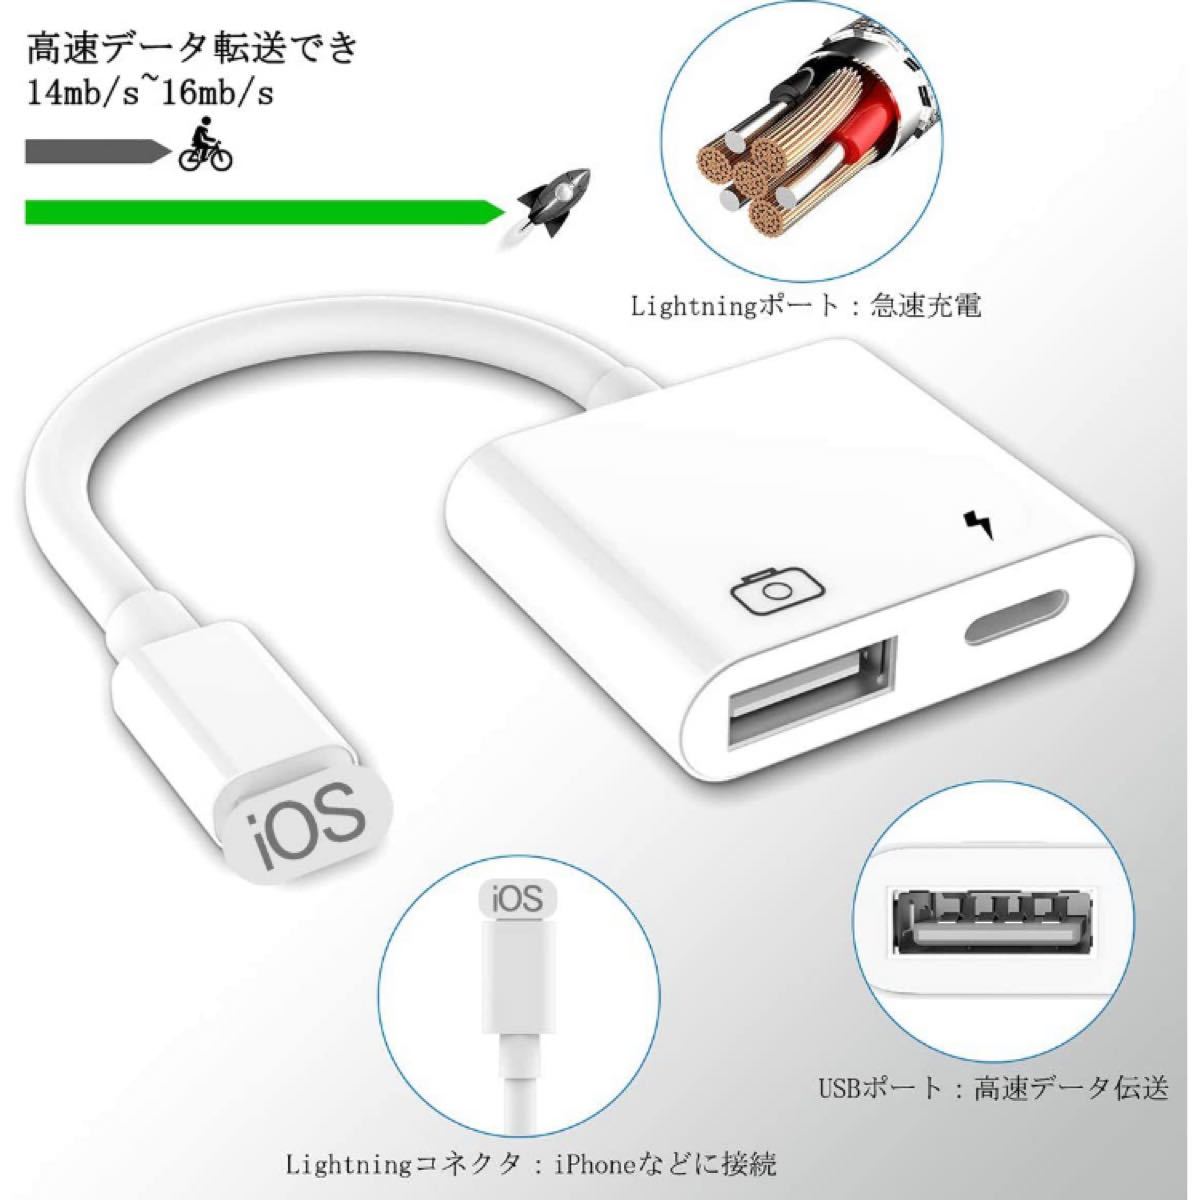 iPhone USB 変換 アダプタ Lightning USB 変換 ケーブル